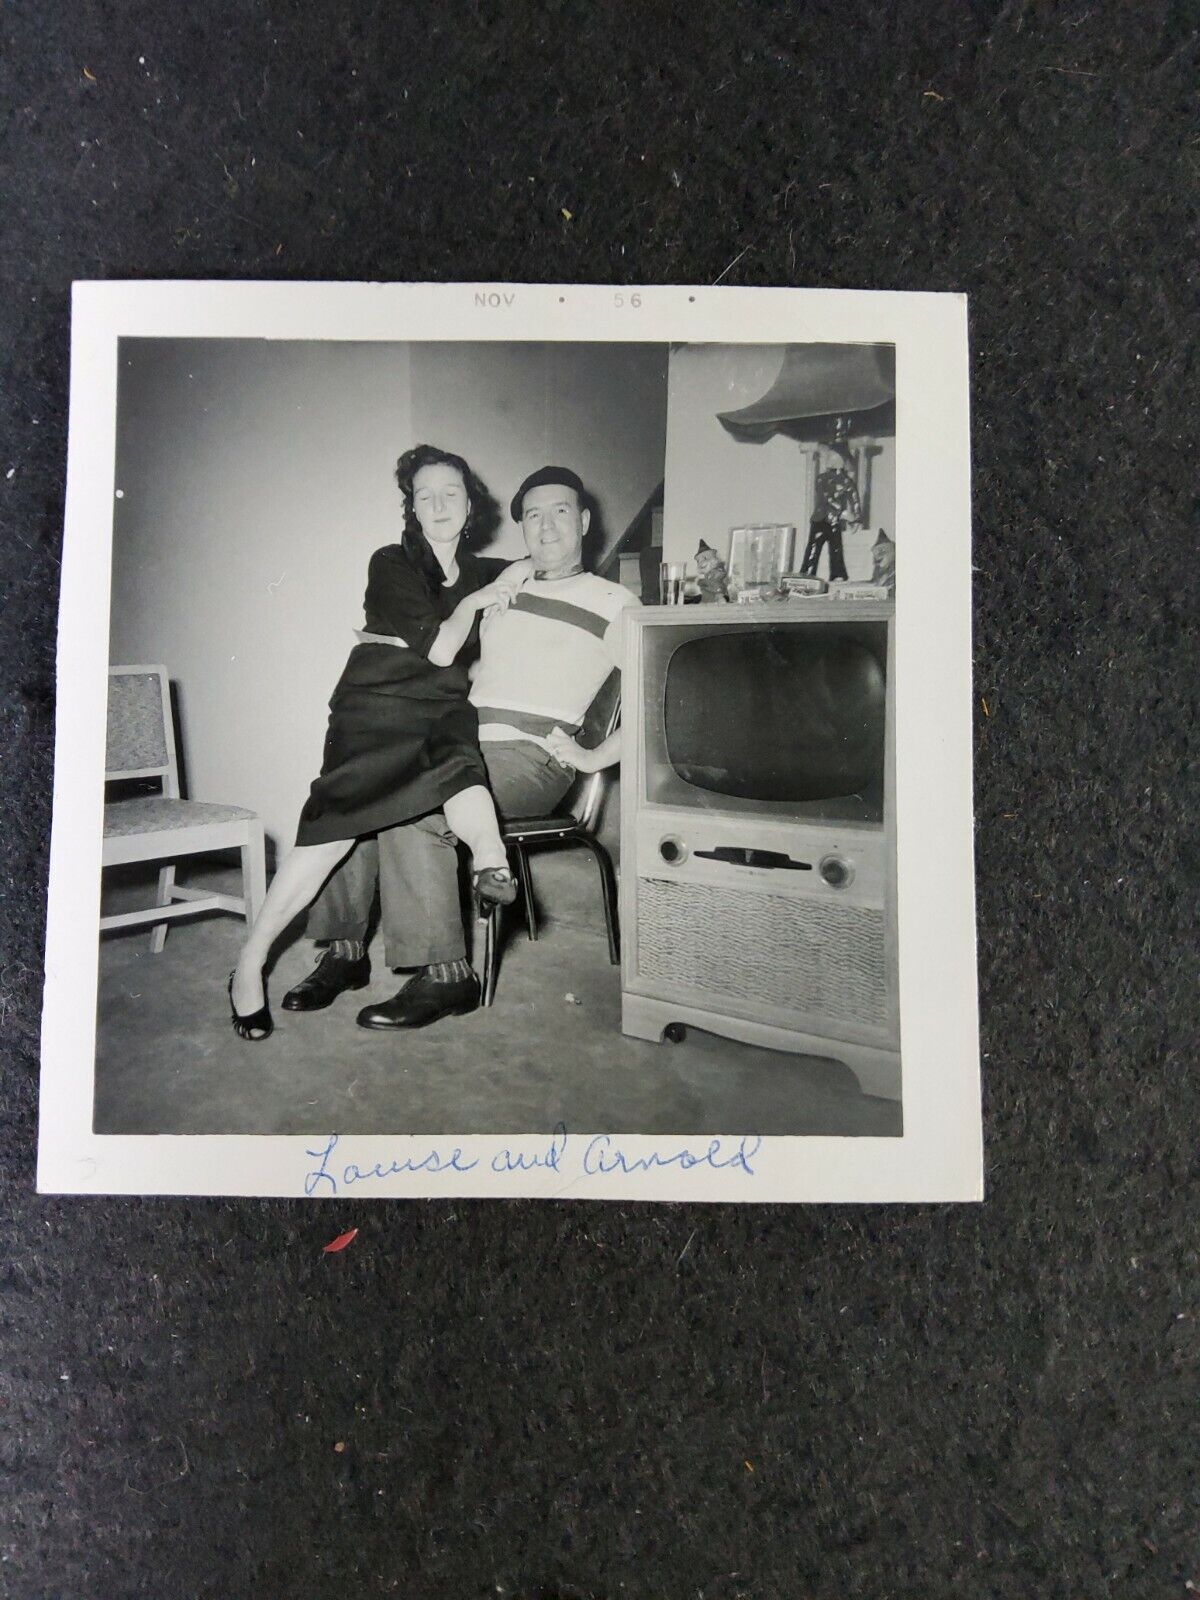 Vintage Press Photo Black & White Man and Woman Posing Nov 1956 3.5